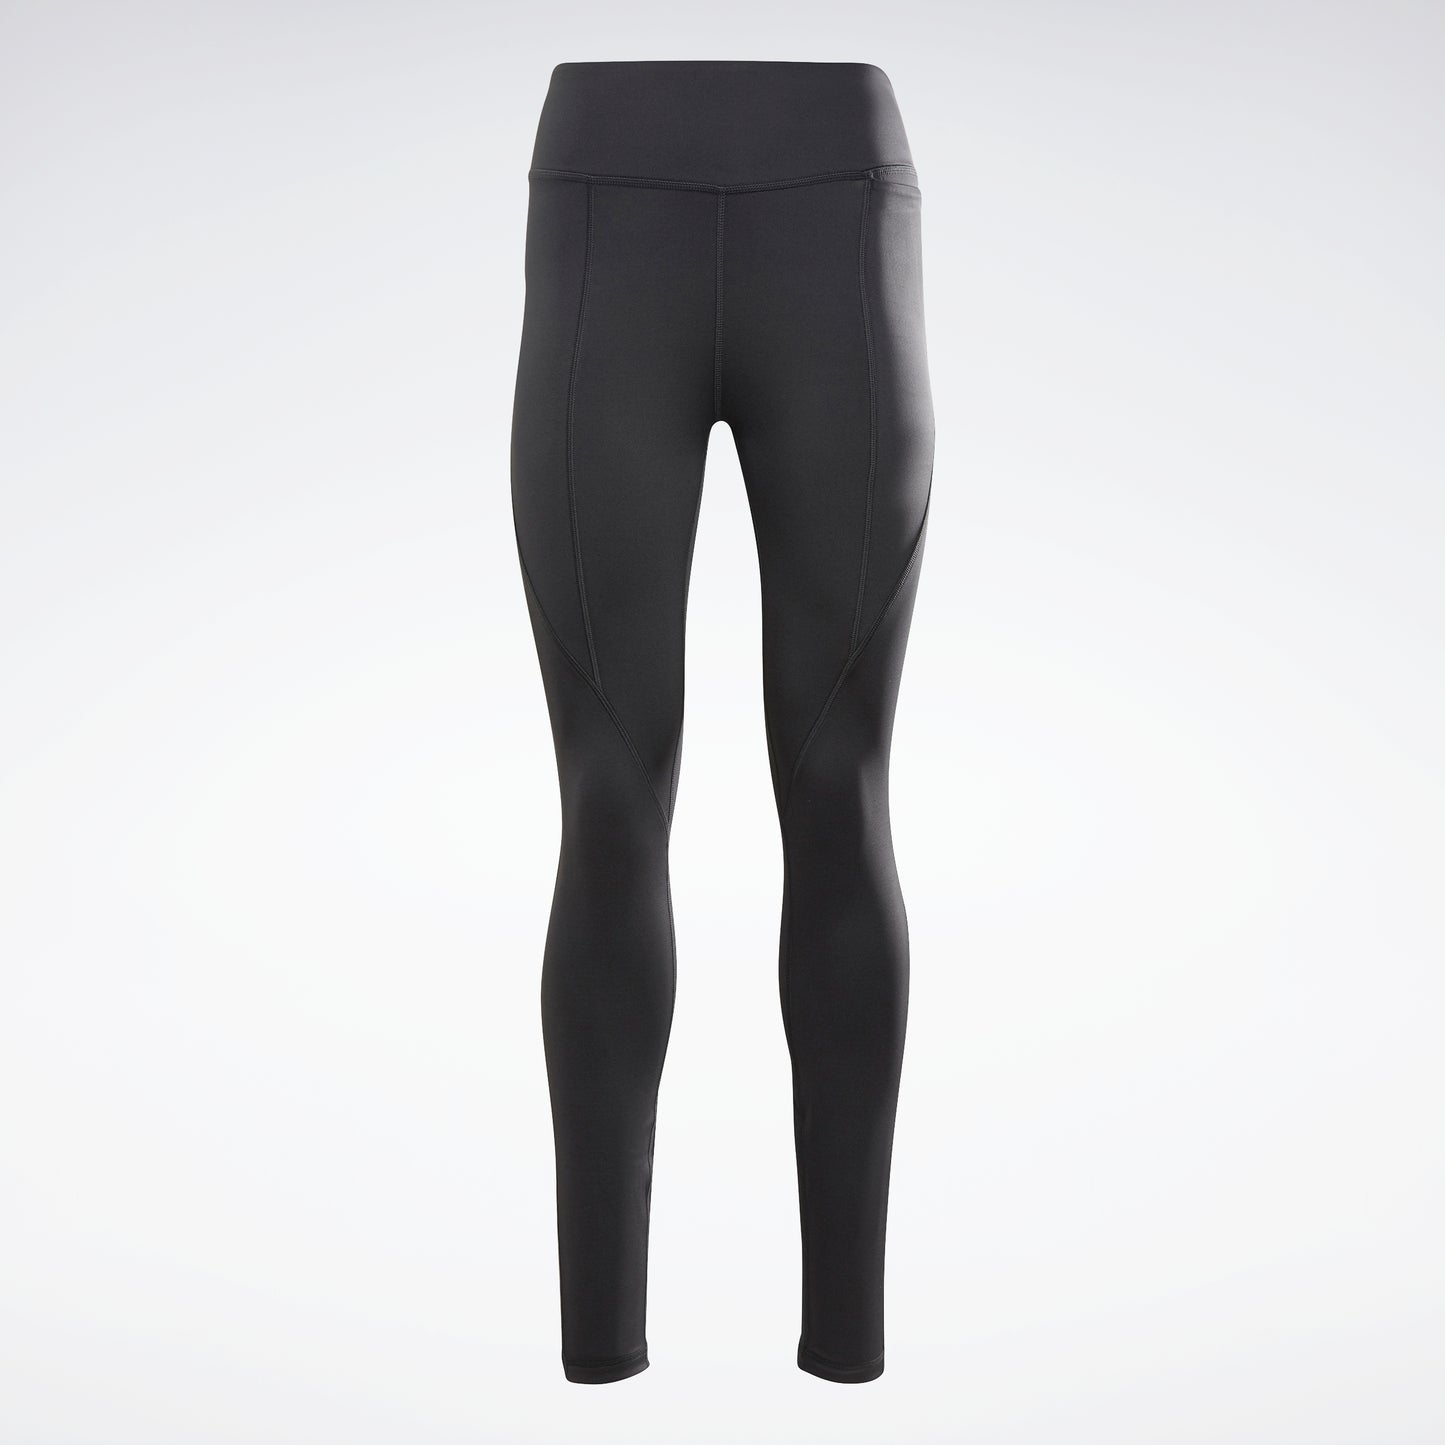 Reebok Athletic Mid Rise Full Length Yoga Pants Grey Women's Size XS